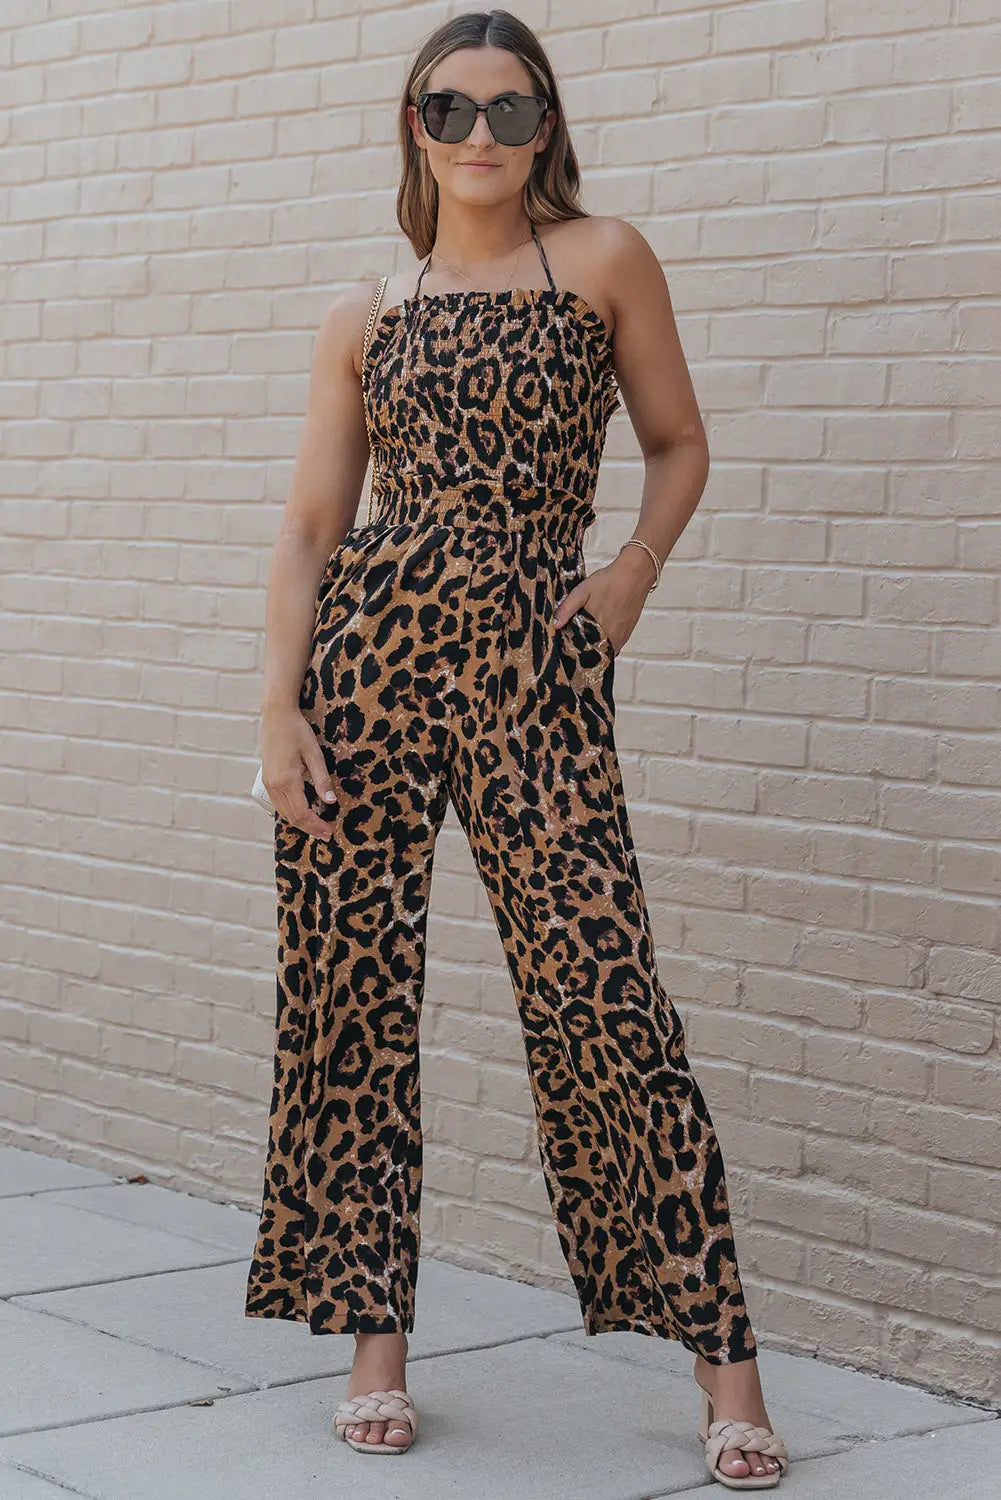 Leopard print halter neck backless wide leg jumpsuit - s 100% polyester jumpsuits & rompers